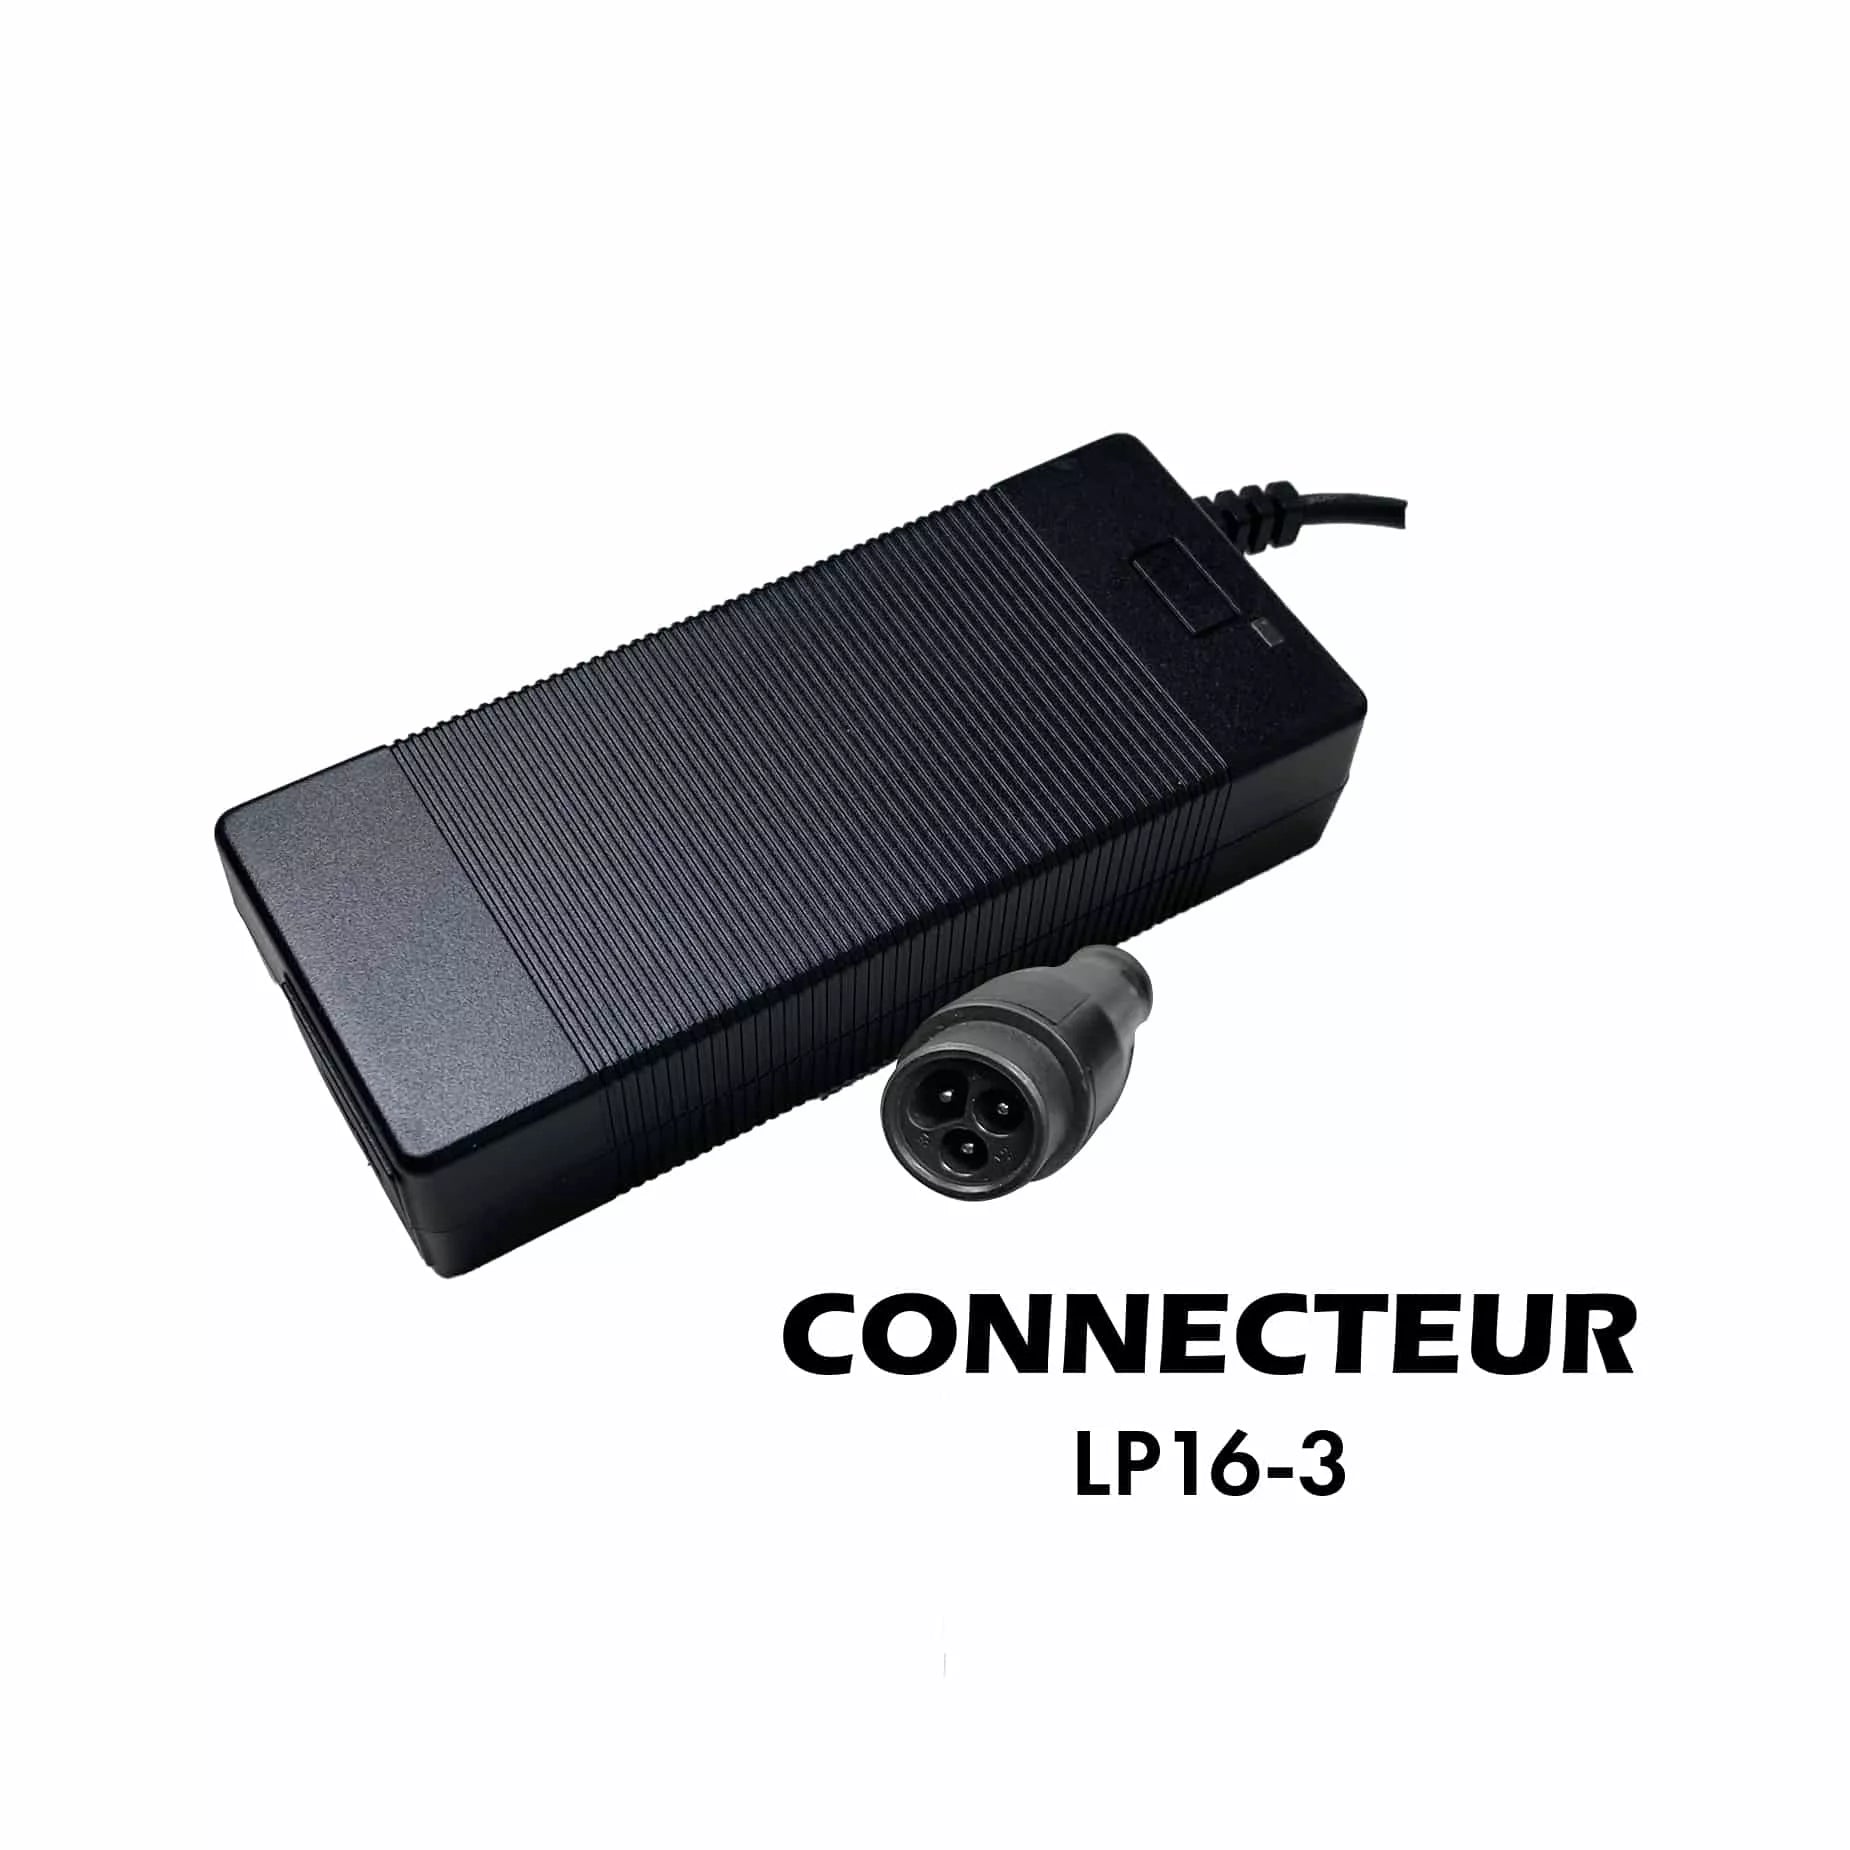 USB et allume cigare : prise, chargeur, adaptateur - Speedway